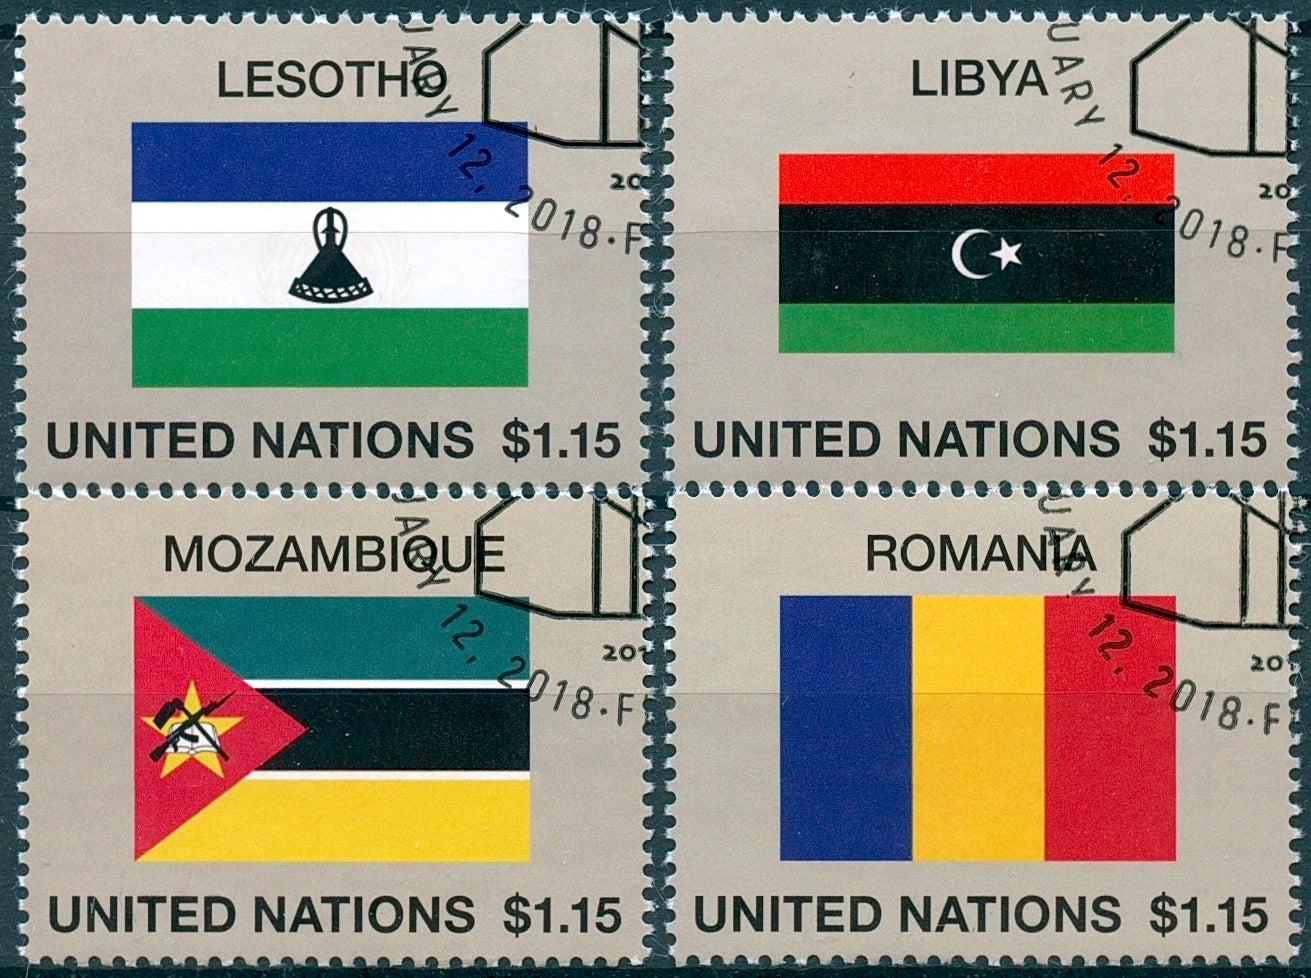 United Nations UN 2018 CTO Flag Series 54 Lesotho Libya 4v Set Flags Stamps